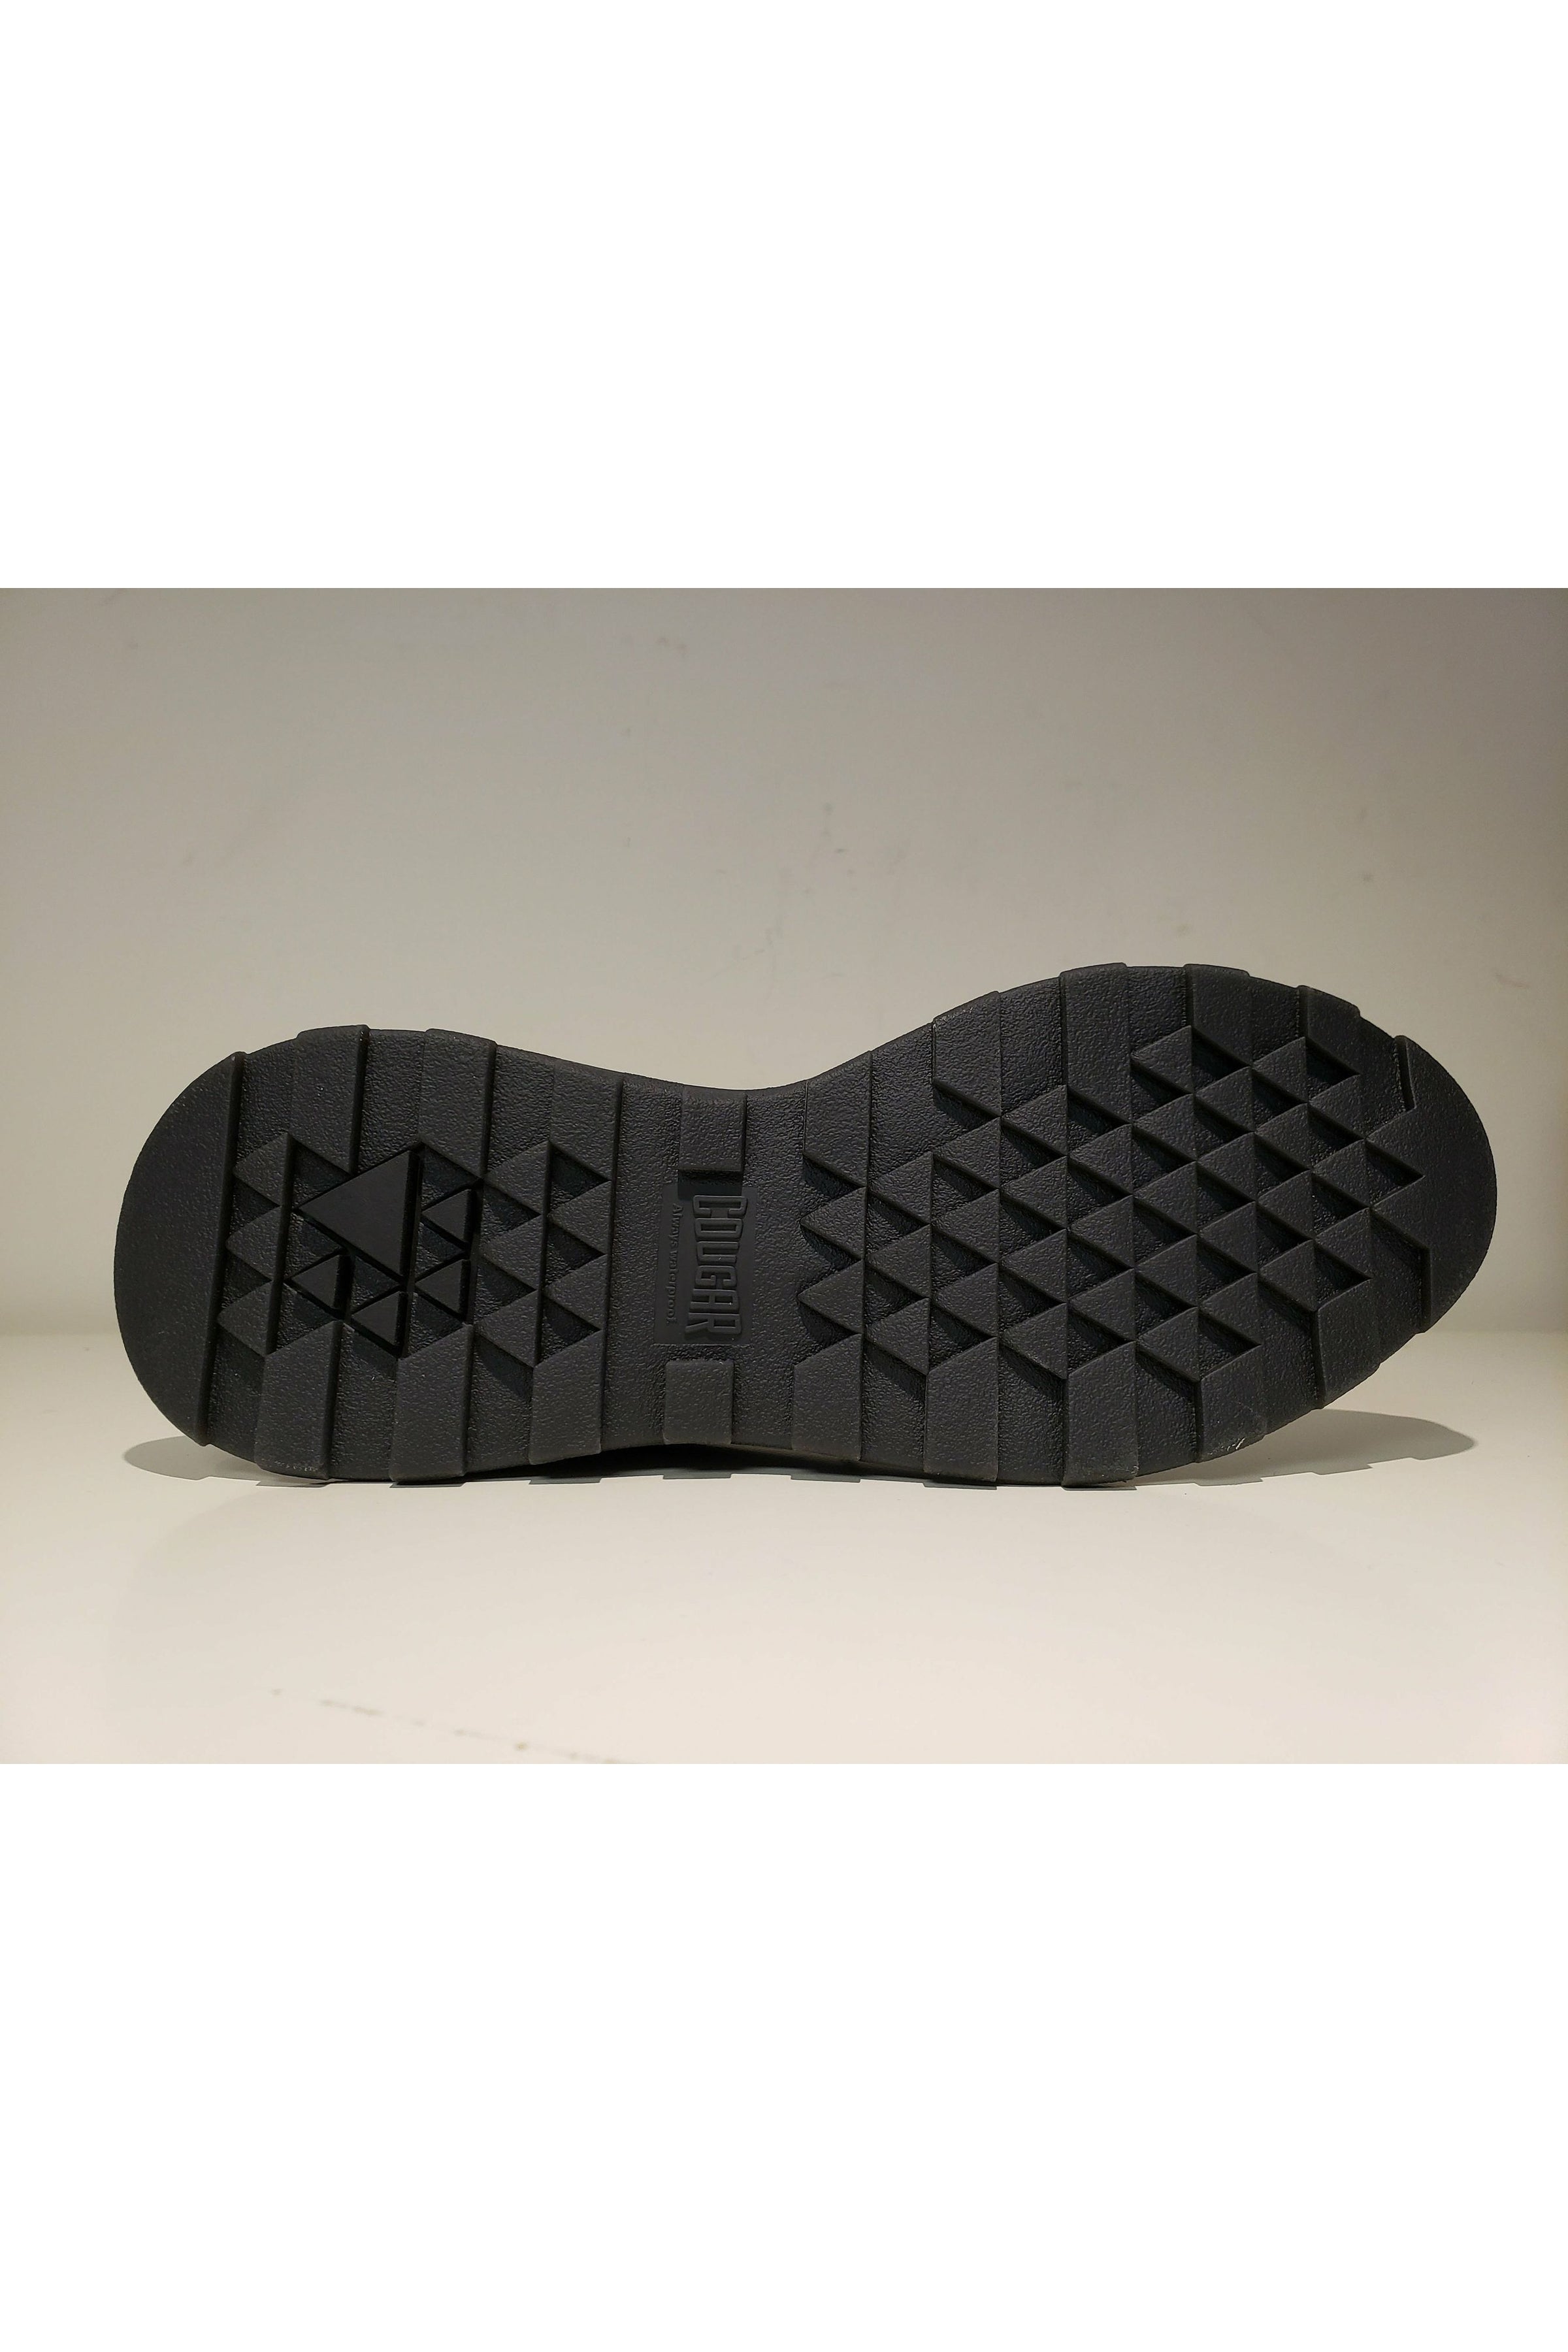 Cougar Nylon Waterproof Sneaker - Style Razzle, bottom, black